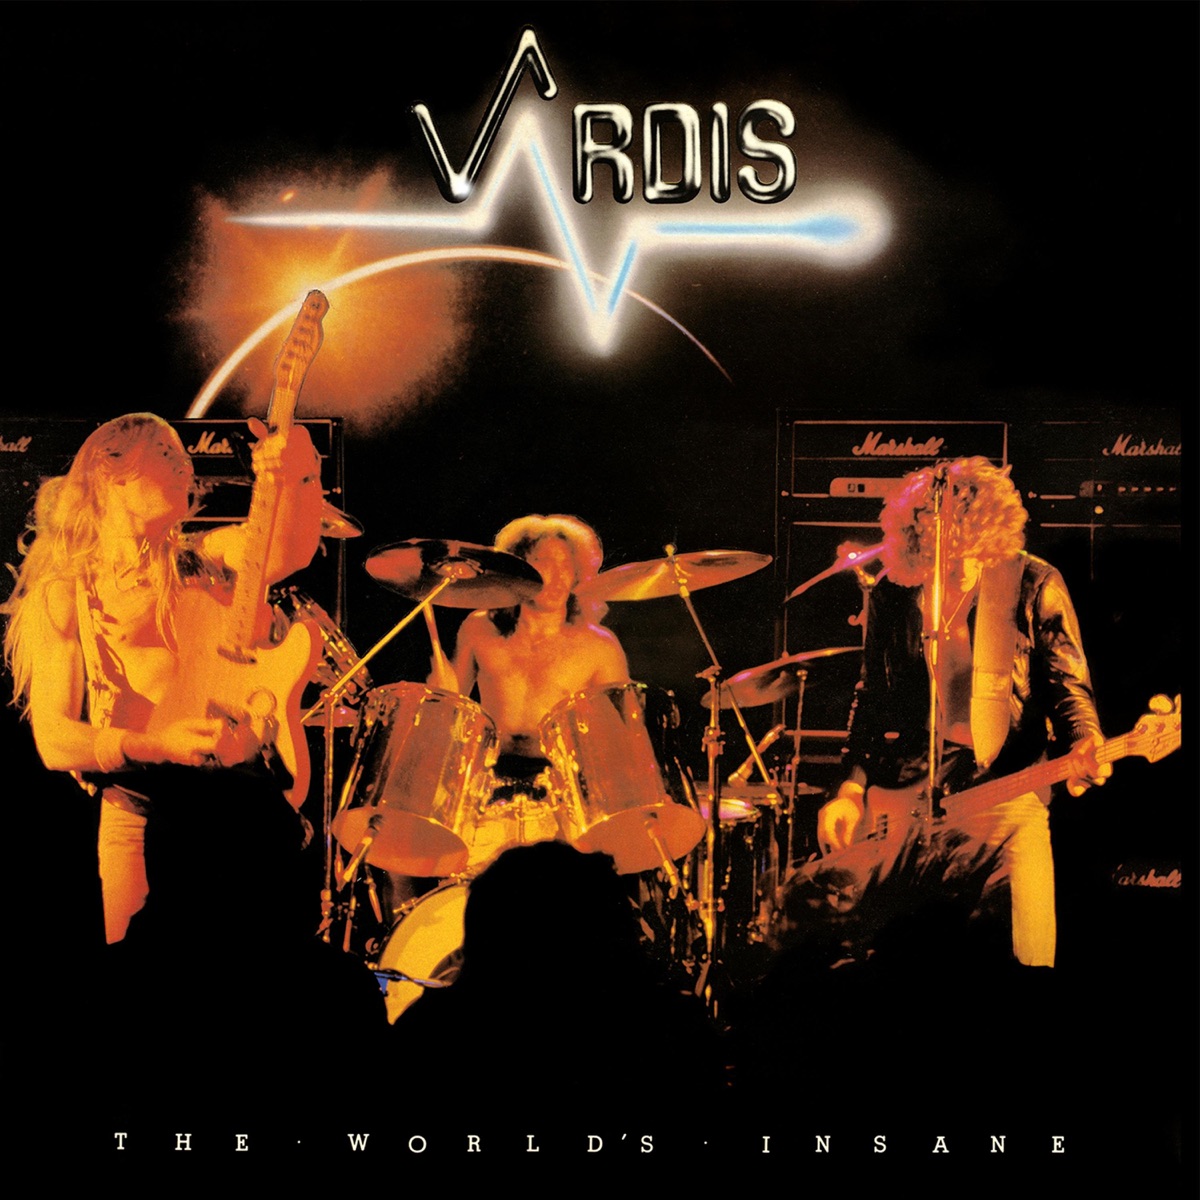 The World's Insane - Album by Vardis - Apple Music